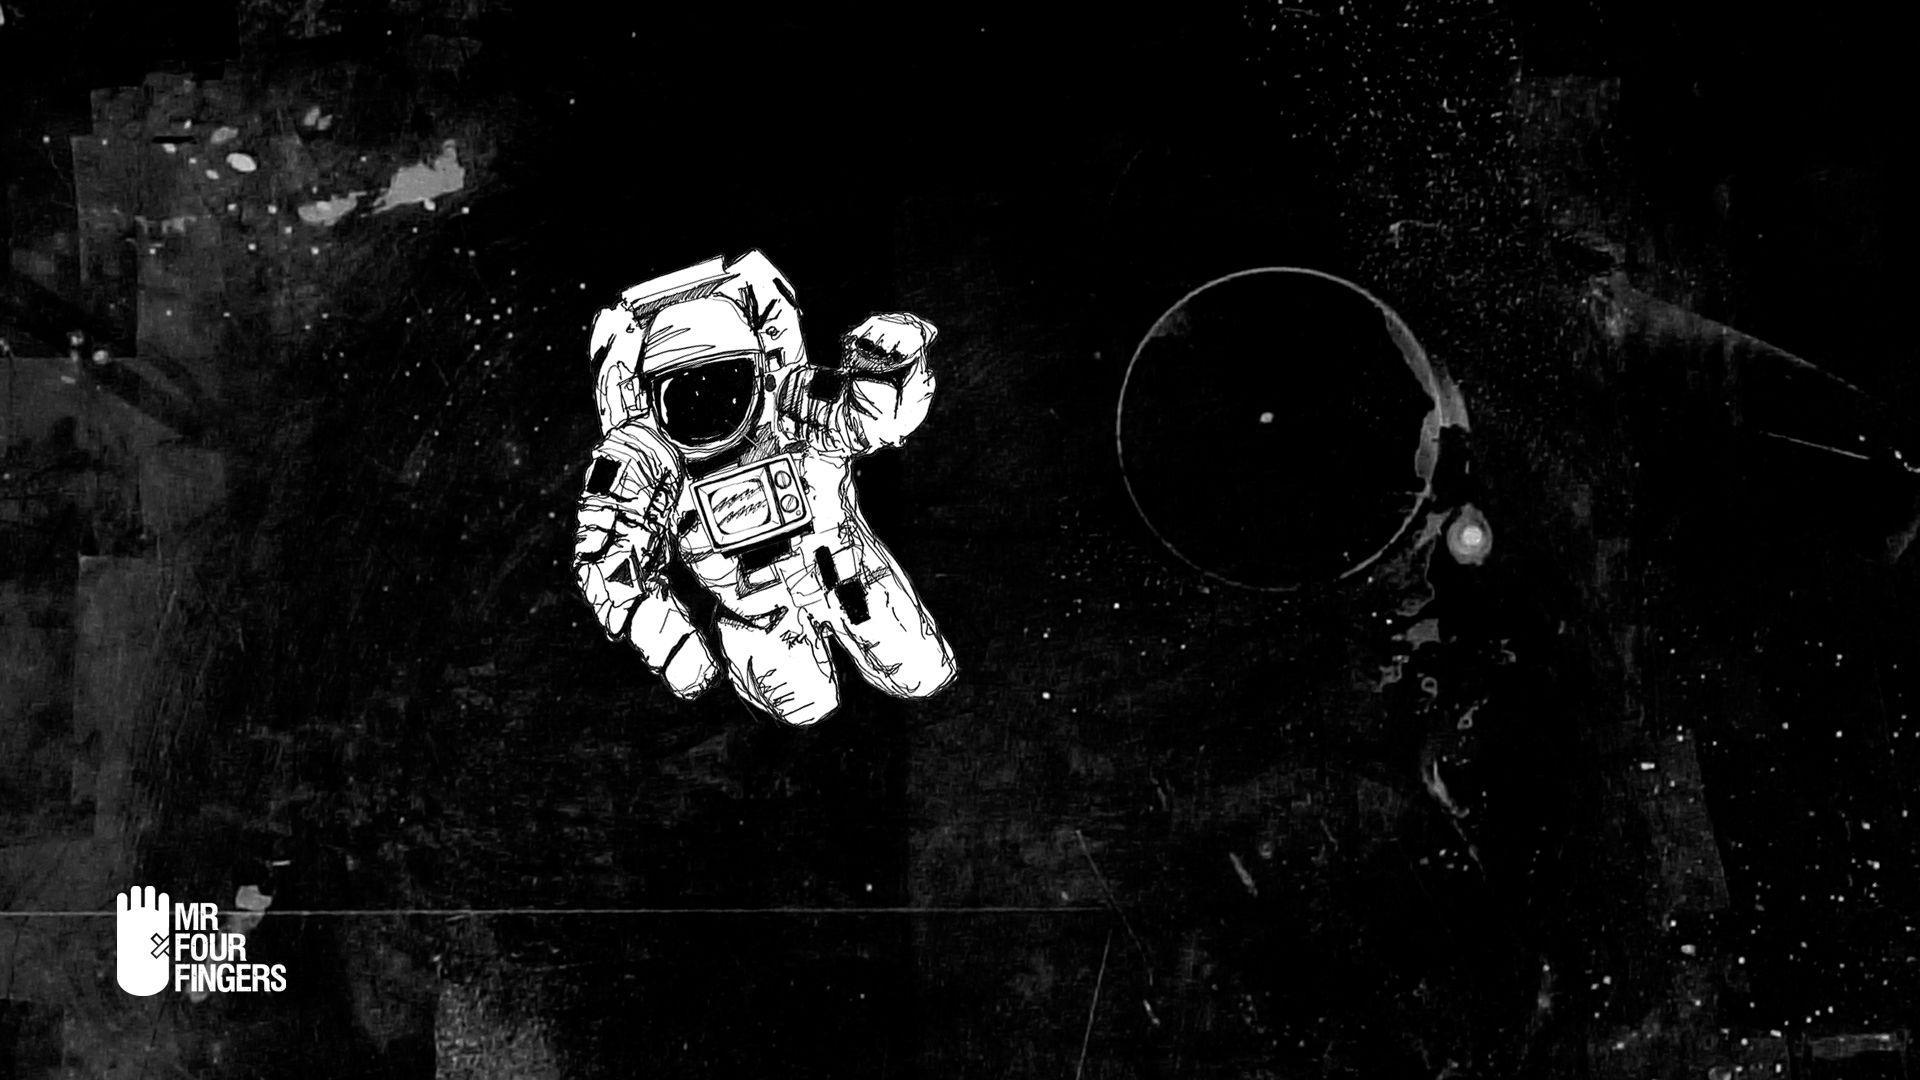 Spaceman Wallpaper, Download Spaceman HD Wallpaper for Free, SHX.I